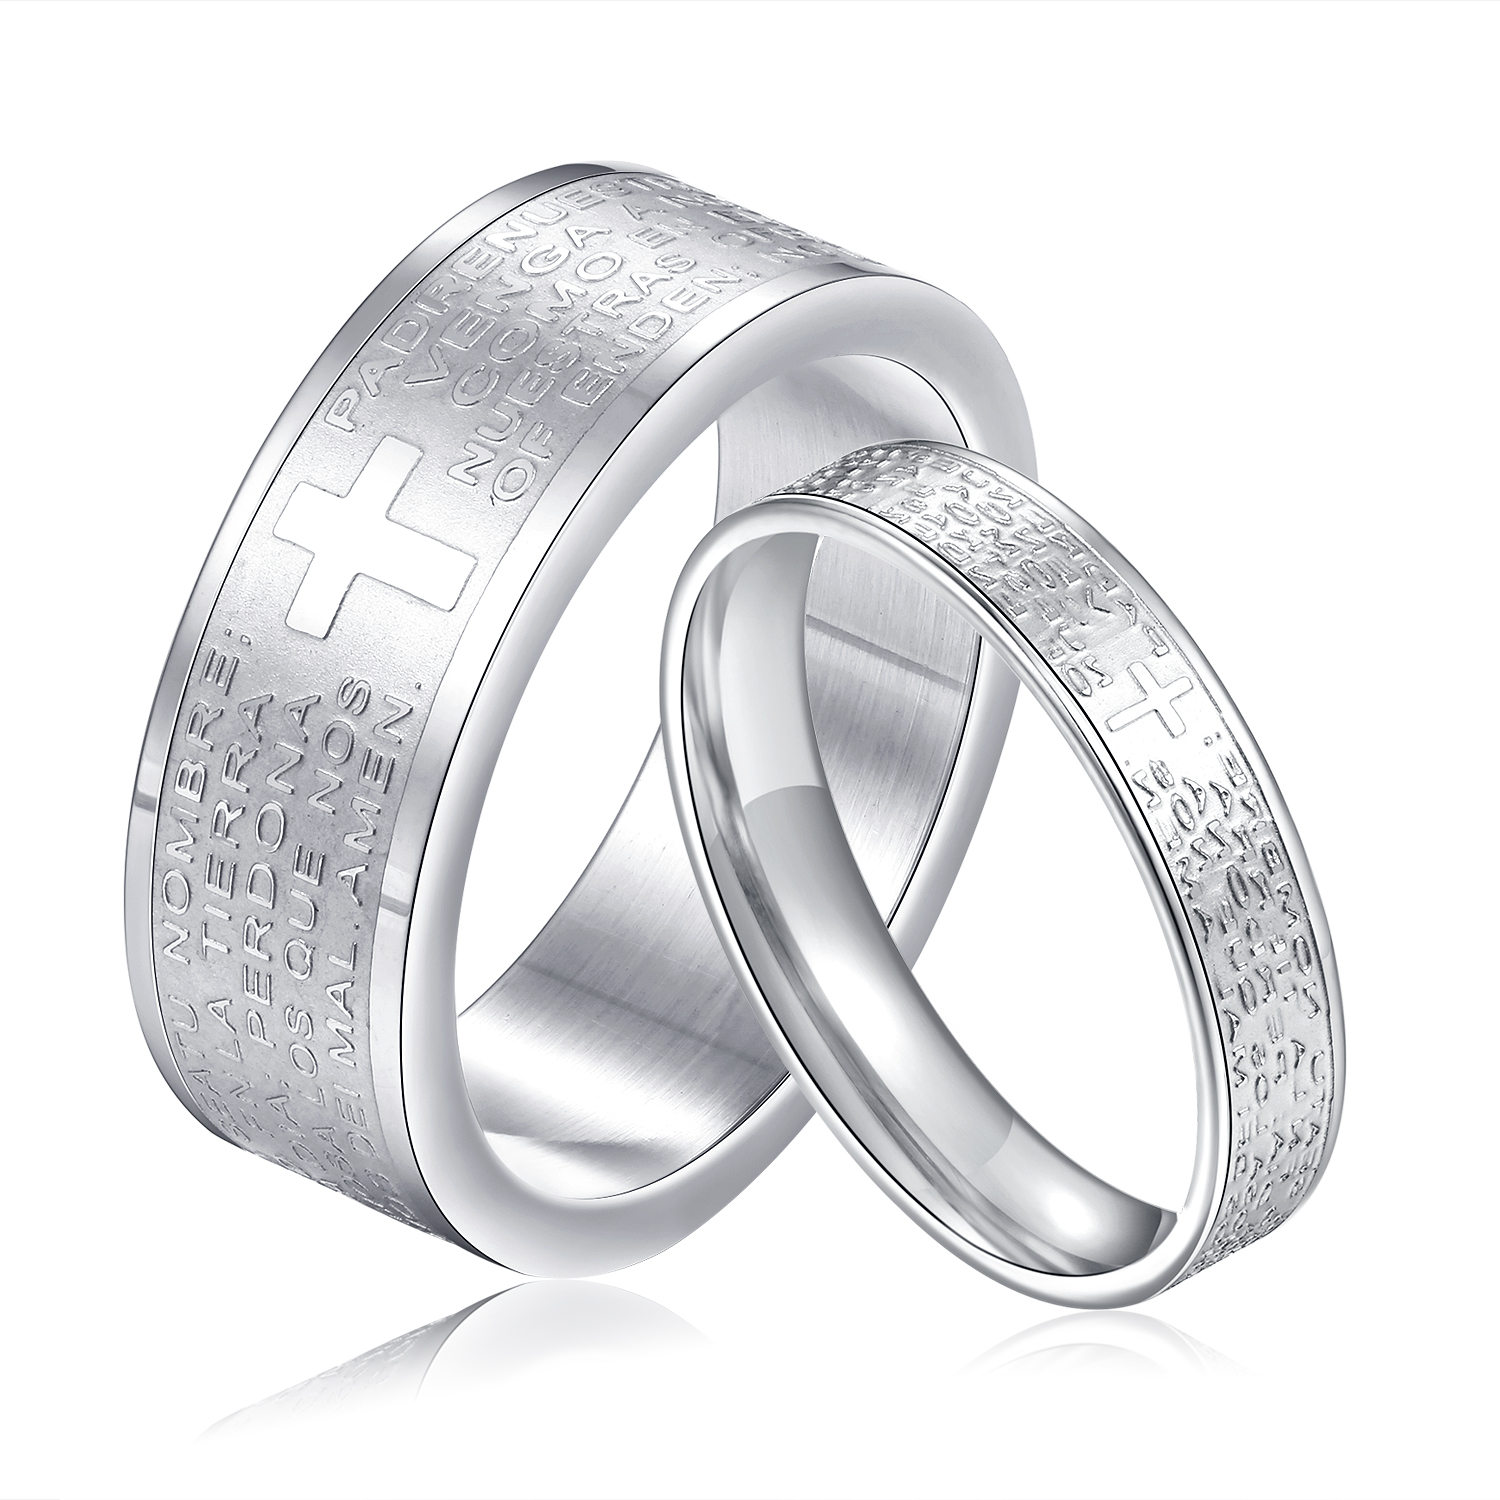 Christian Stainless Steel Cross Bible Couple Ring Sets GJ043